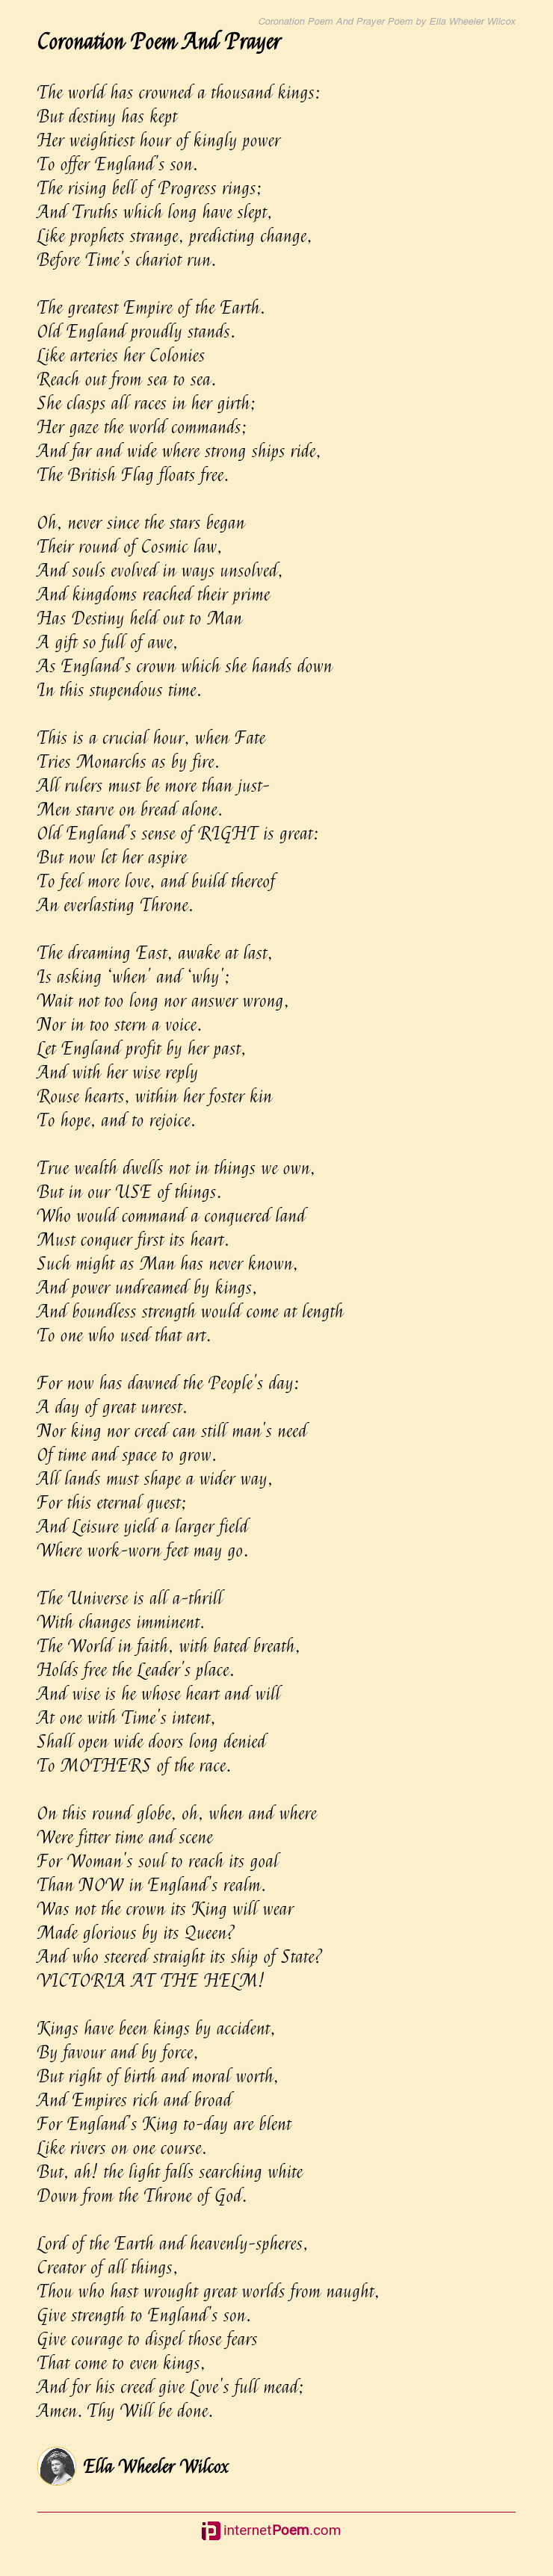 Coronation Poem And Prayer Poem By Ella Wheeler Wilcox